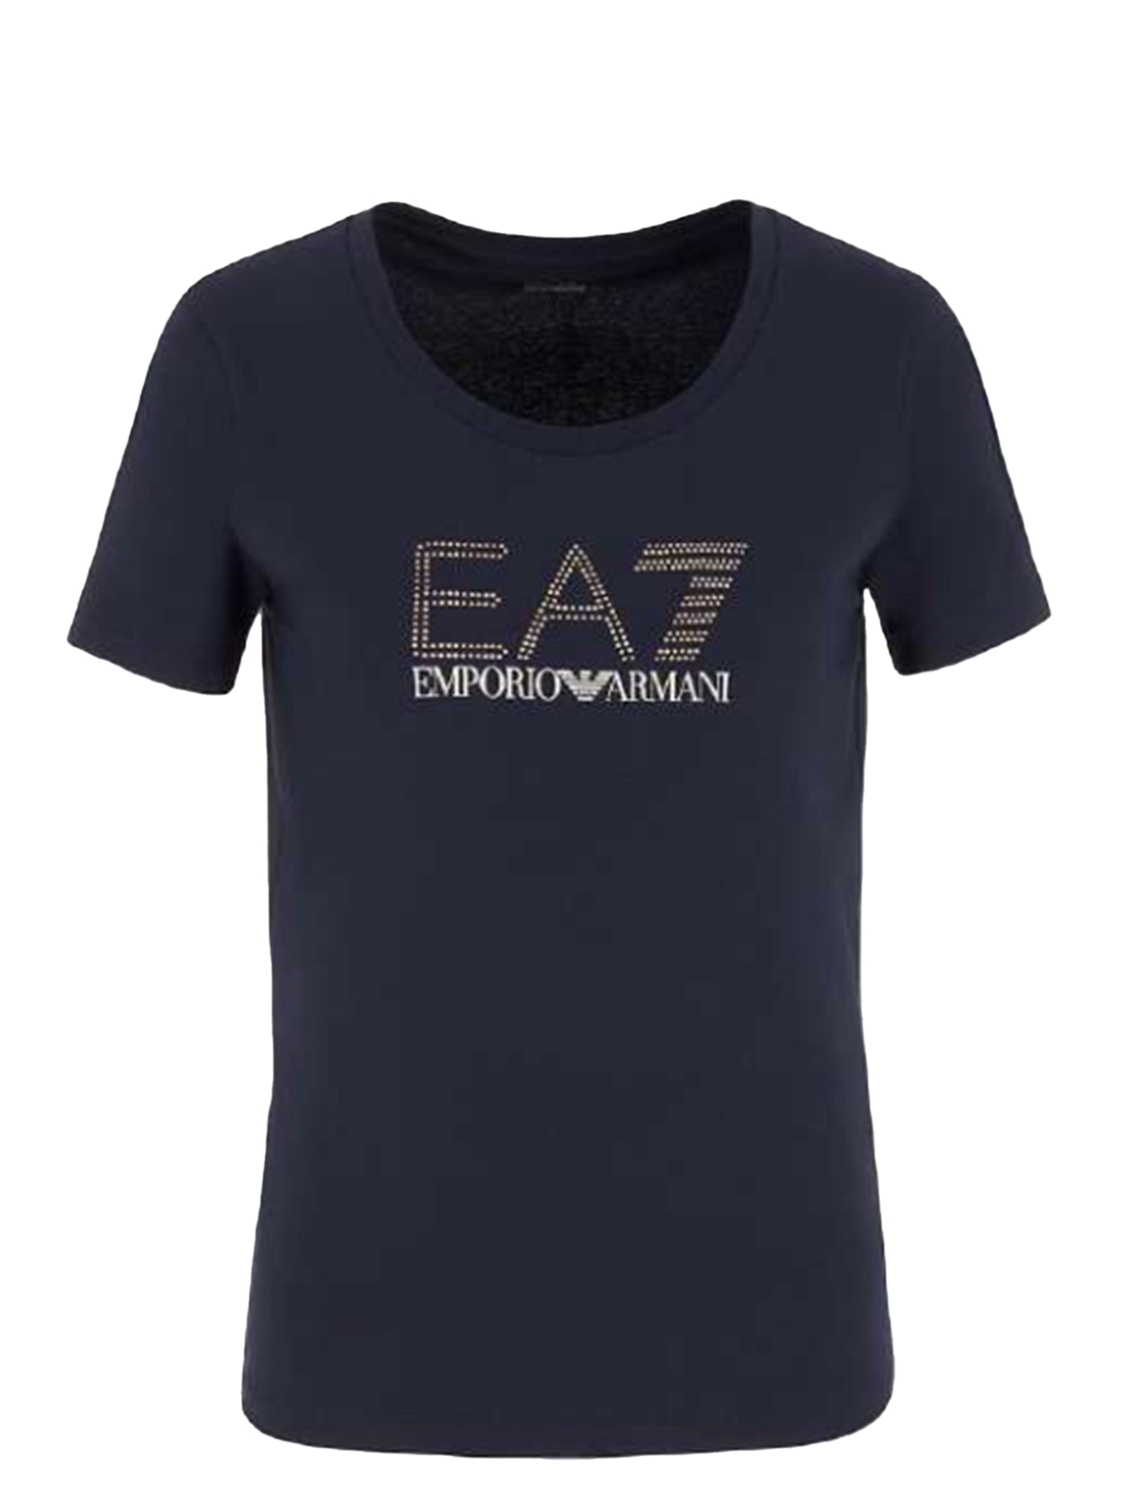 Футболка EA7 Emporio Armani T-Shirt W Navy Blue